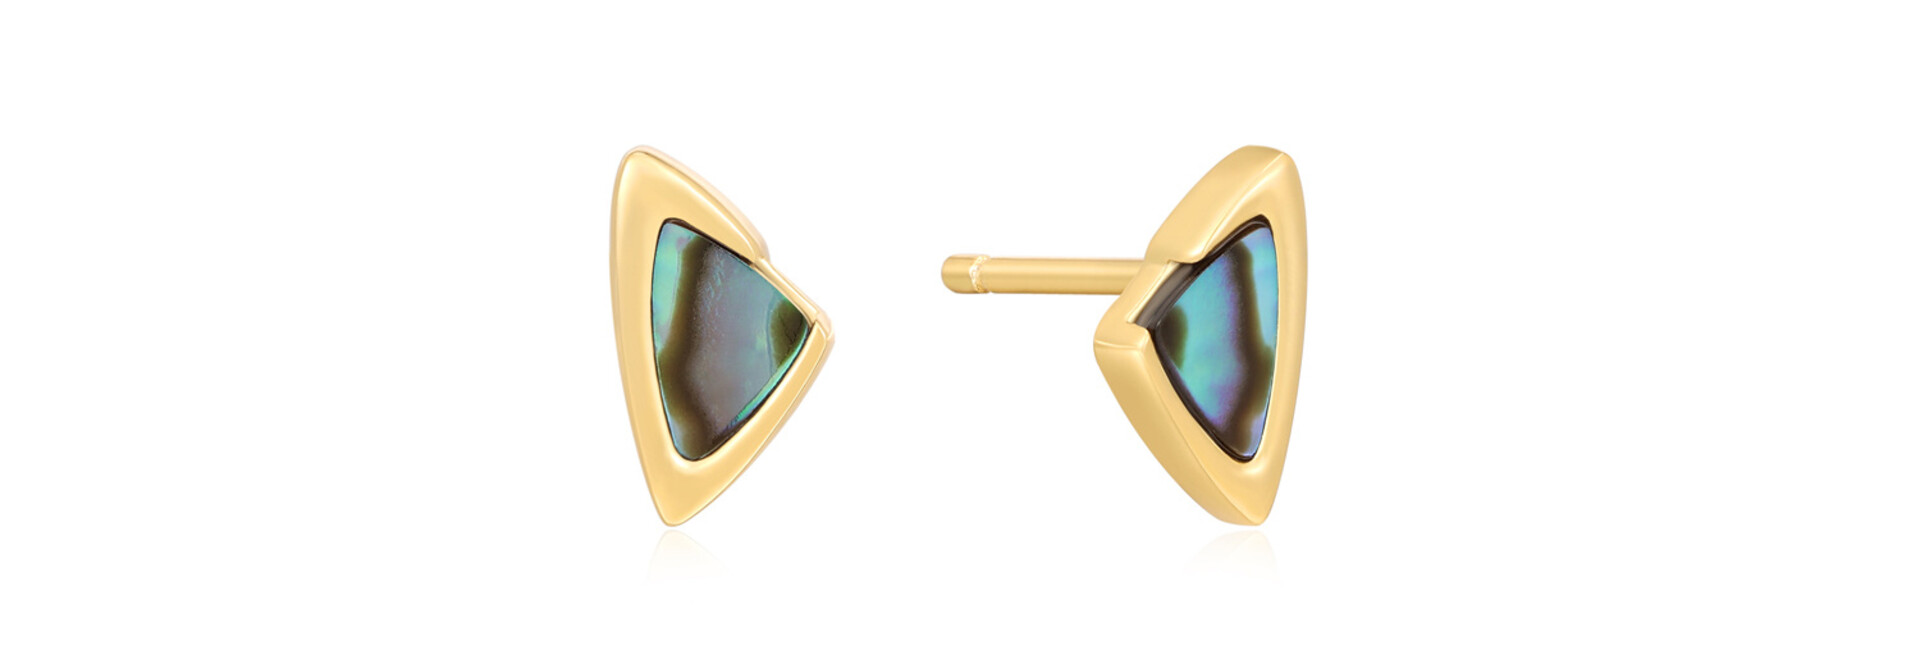 Arrow Abalone Stud Earrings - Gold Plated